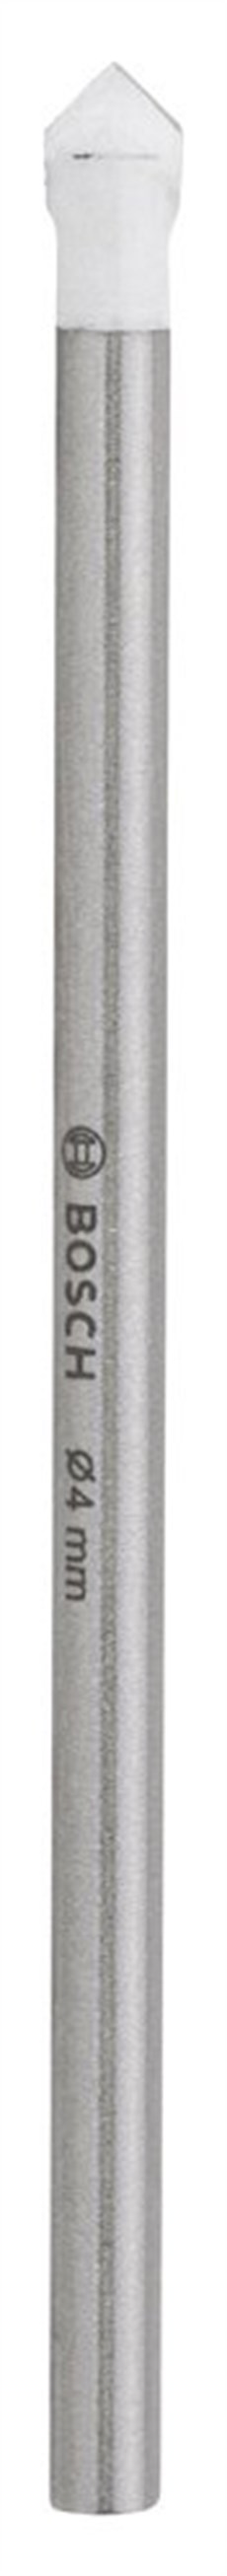 Bosch - cyl-9 Serisi Seramik Matkap Ucu 4*70 mm